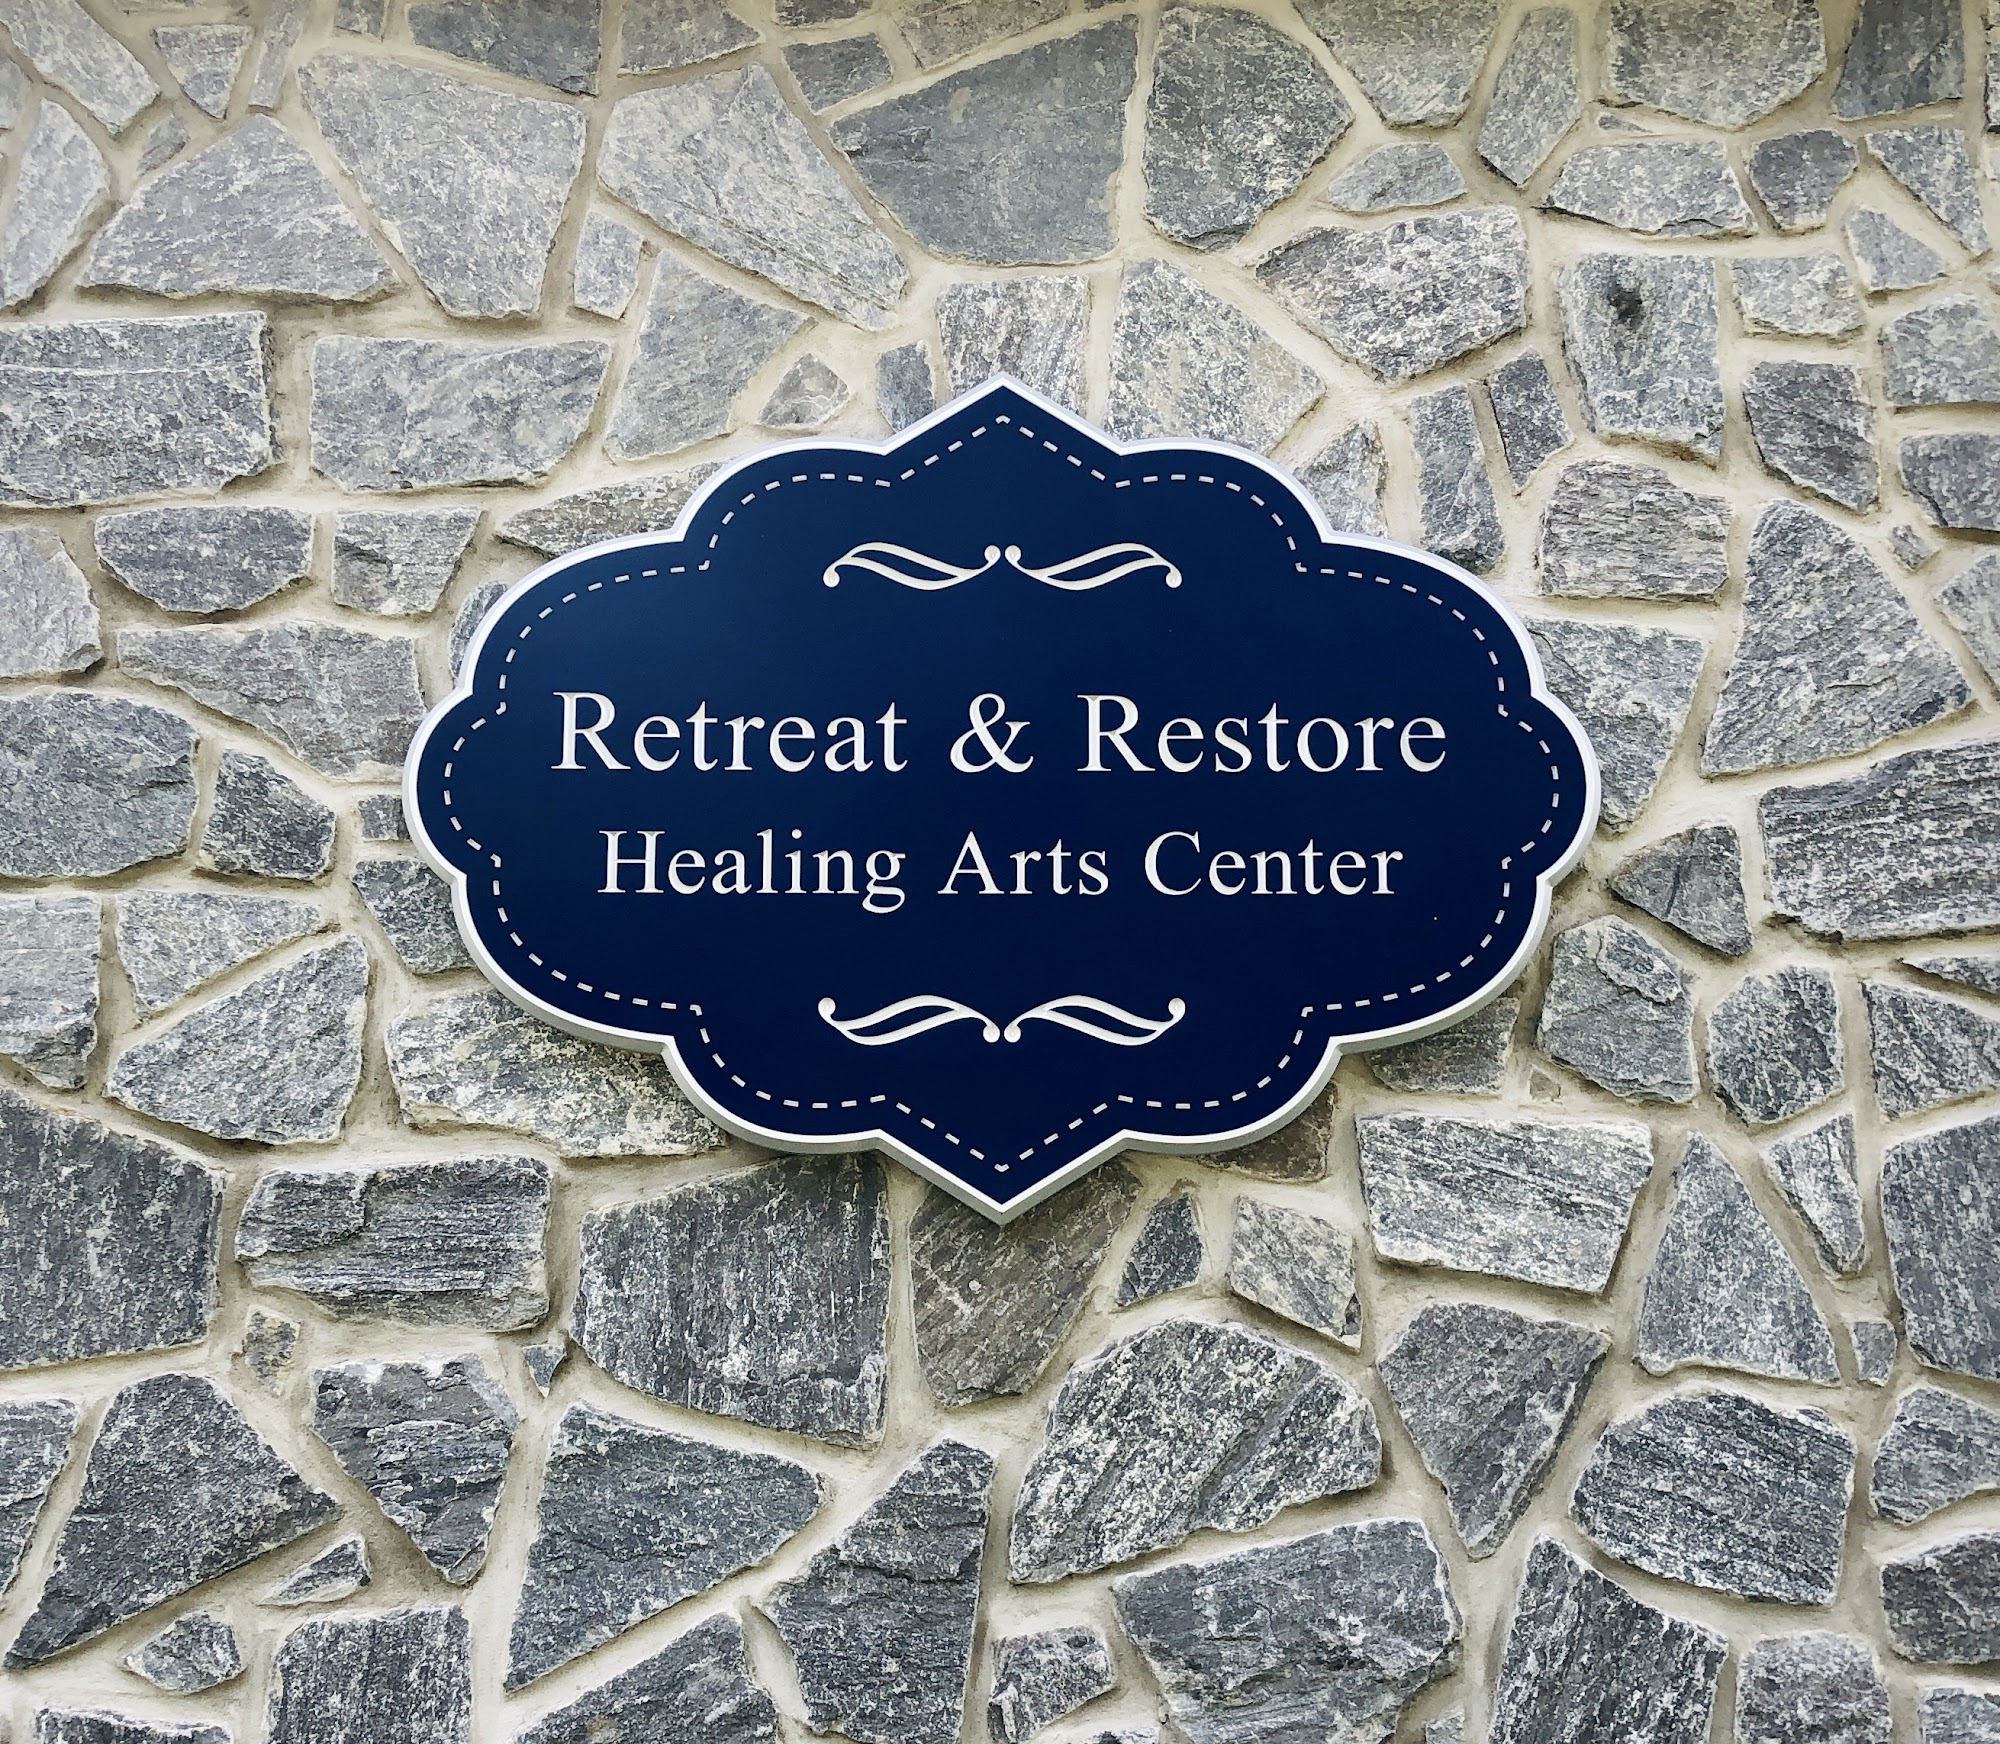 Retreat & Restore Healing Arts Center 622 Haverford Rd, Haverford Pennsylvania 19041